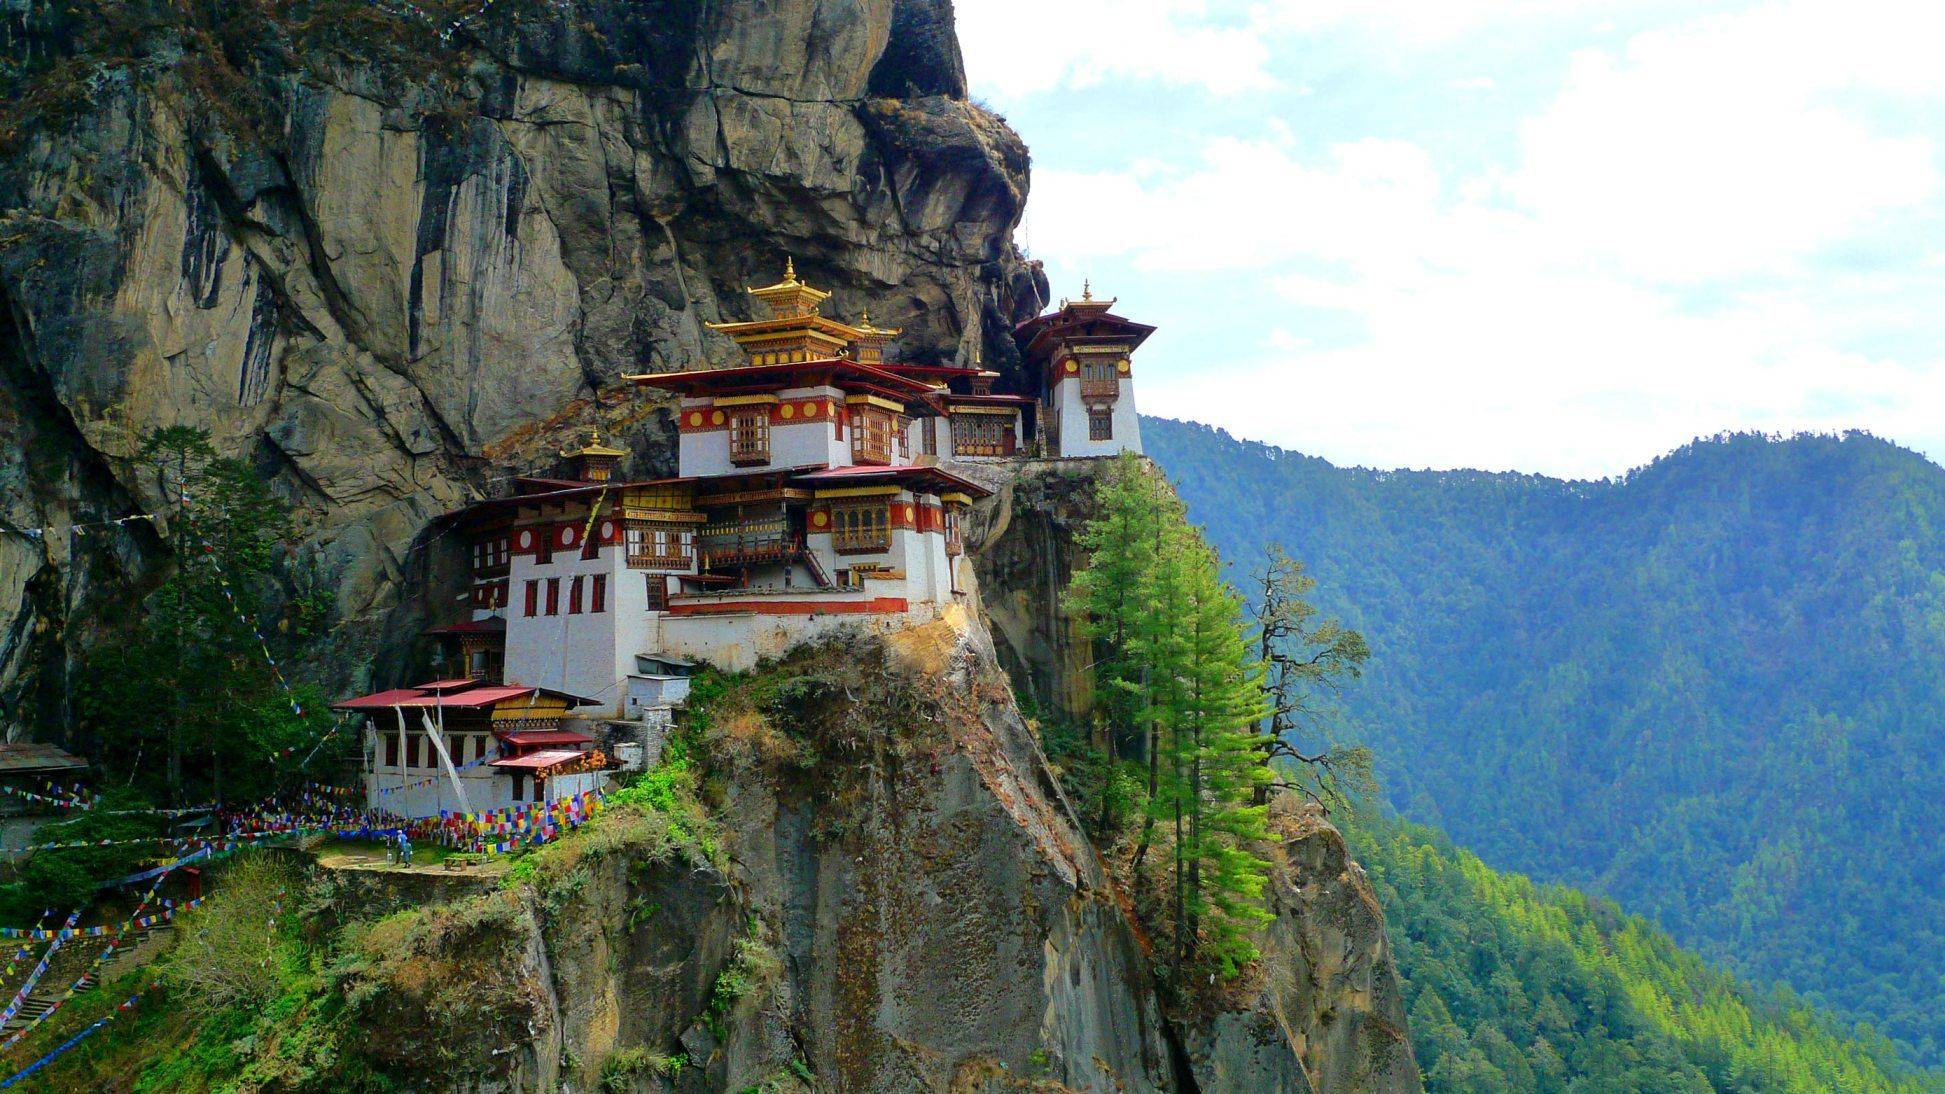 Wanderung zum spektakulären Kloster Tiger’s Nest 